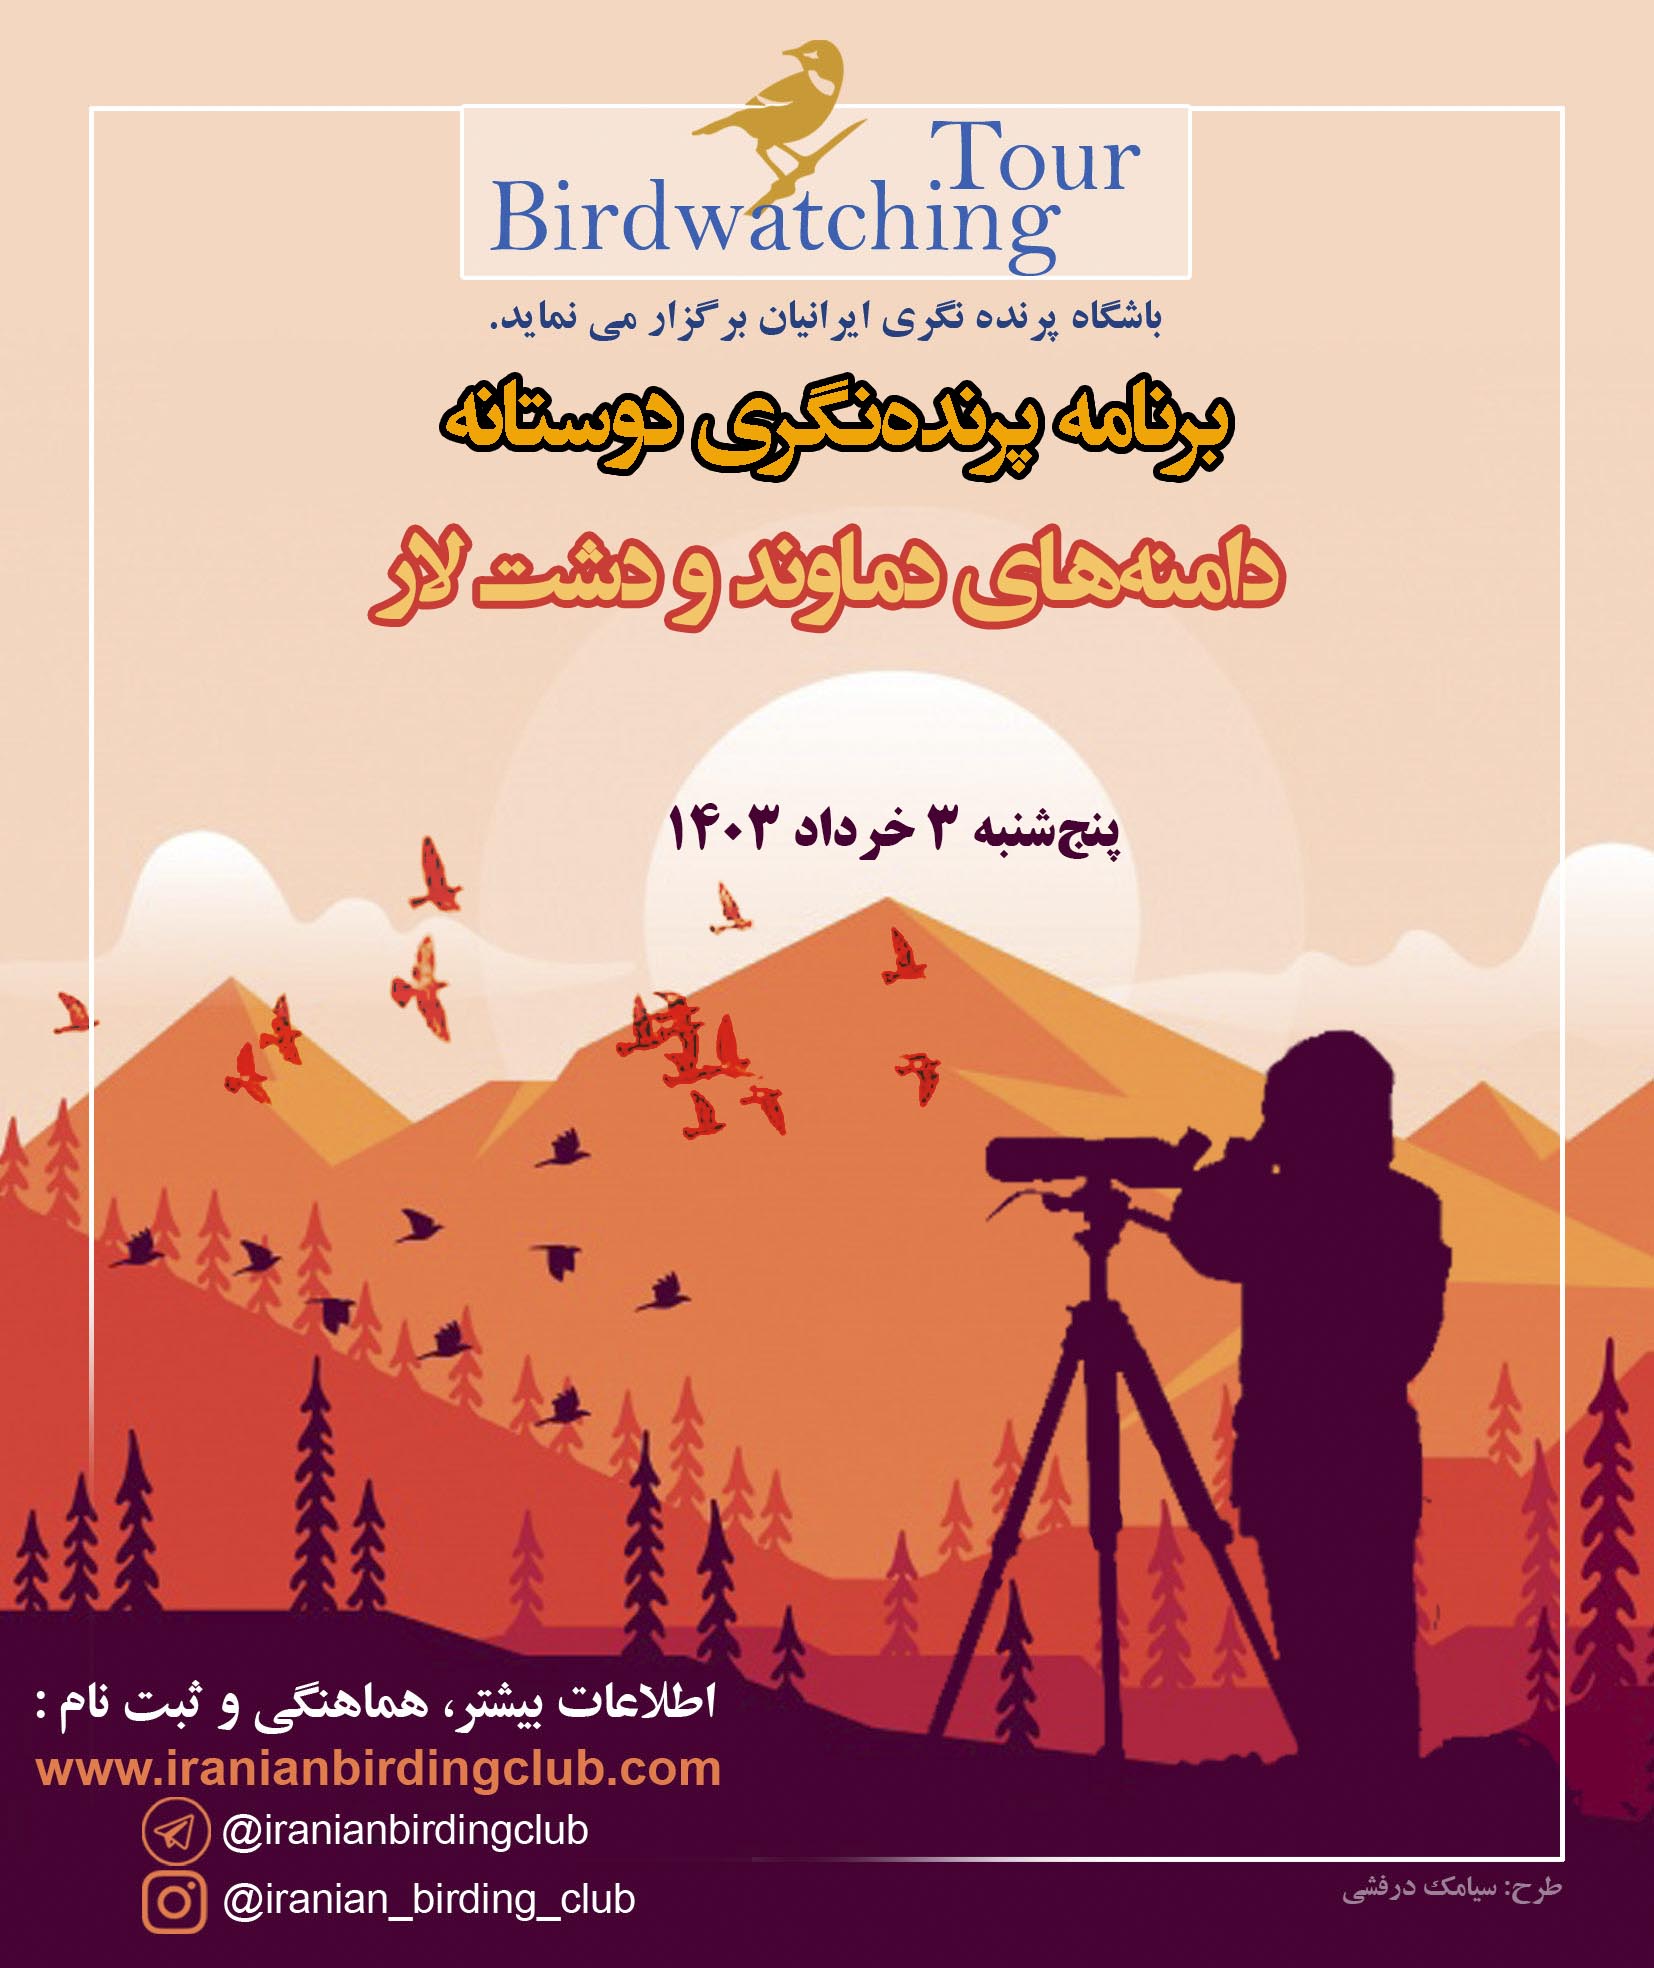 birdwatching Lar National Park Damavand Mountain Iranian Birding club